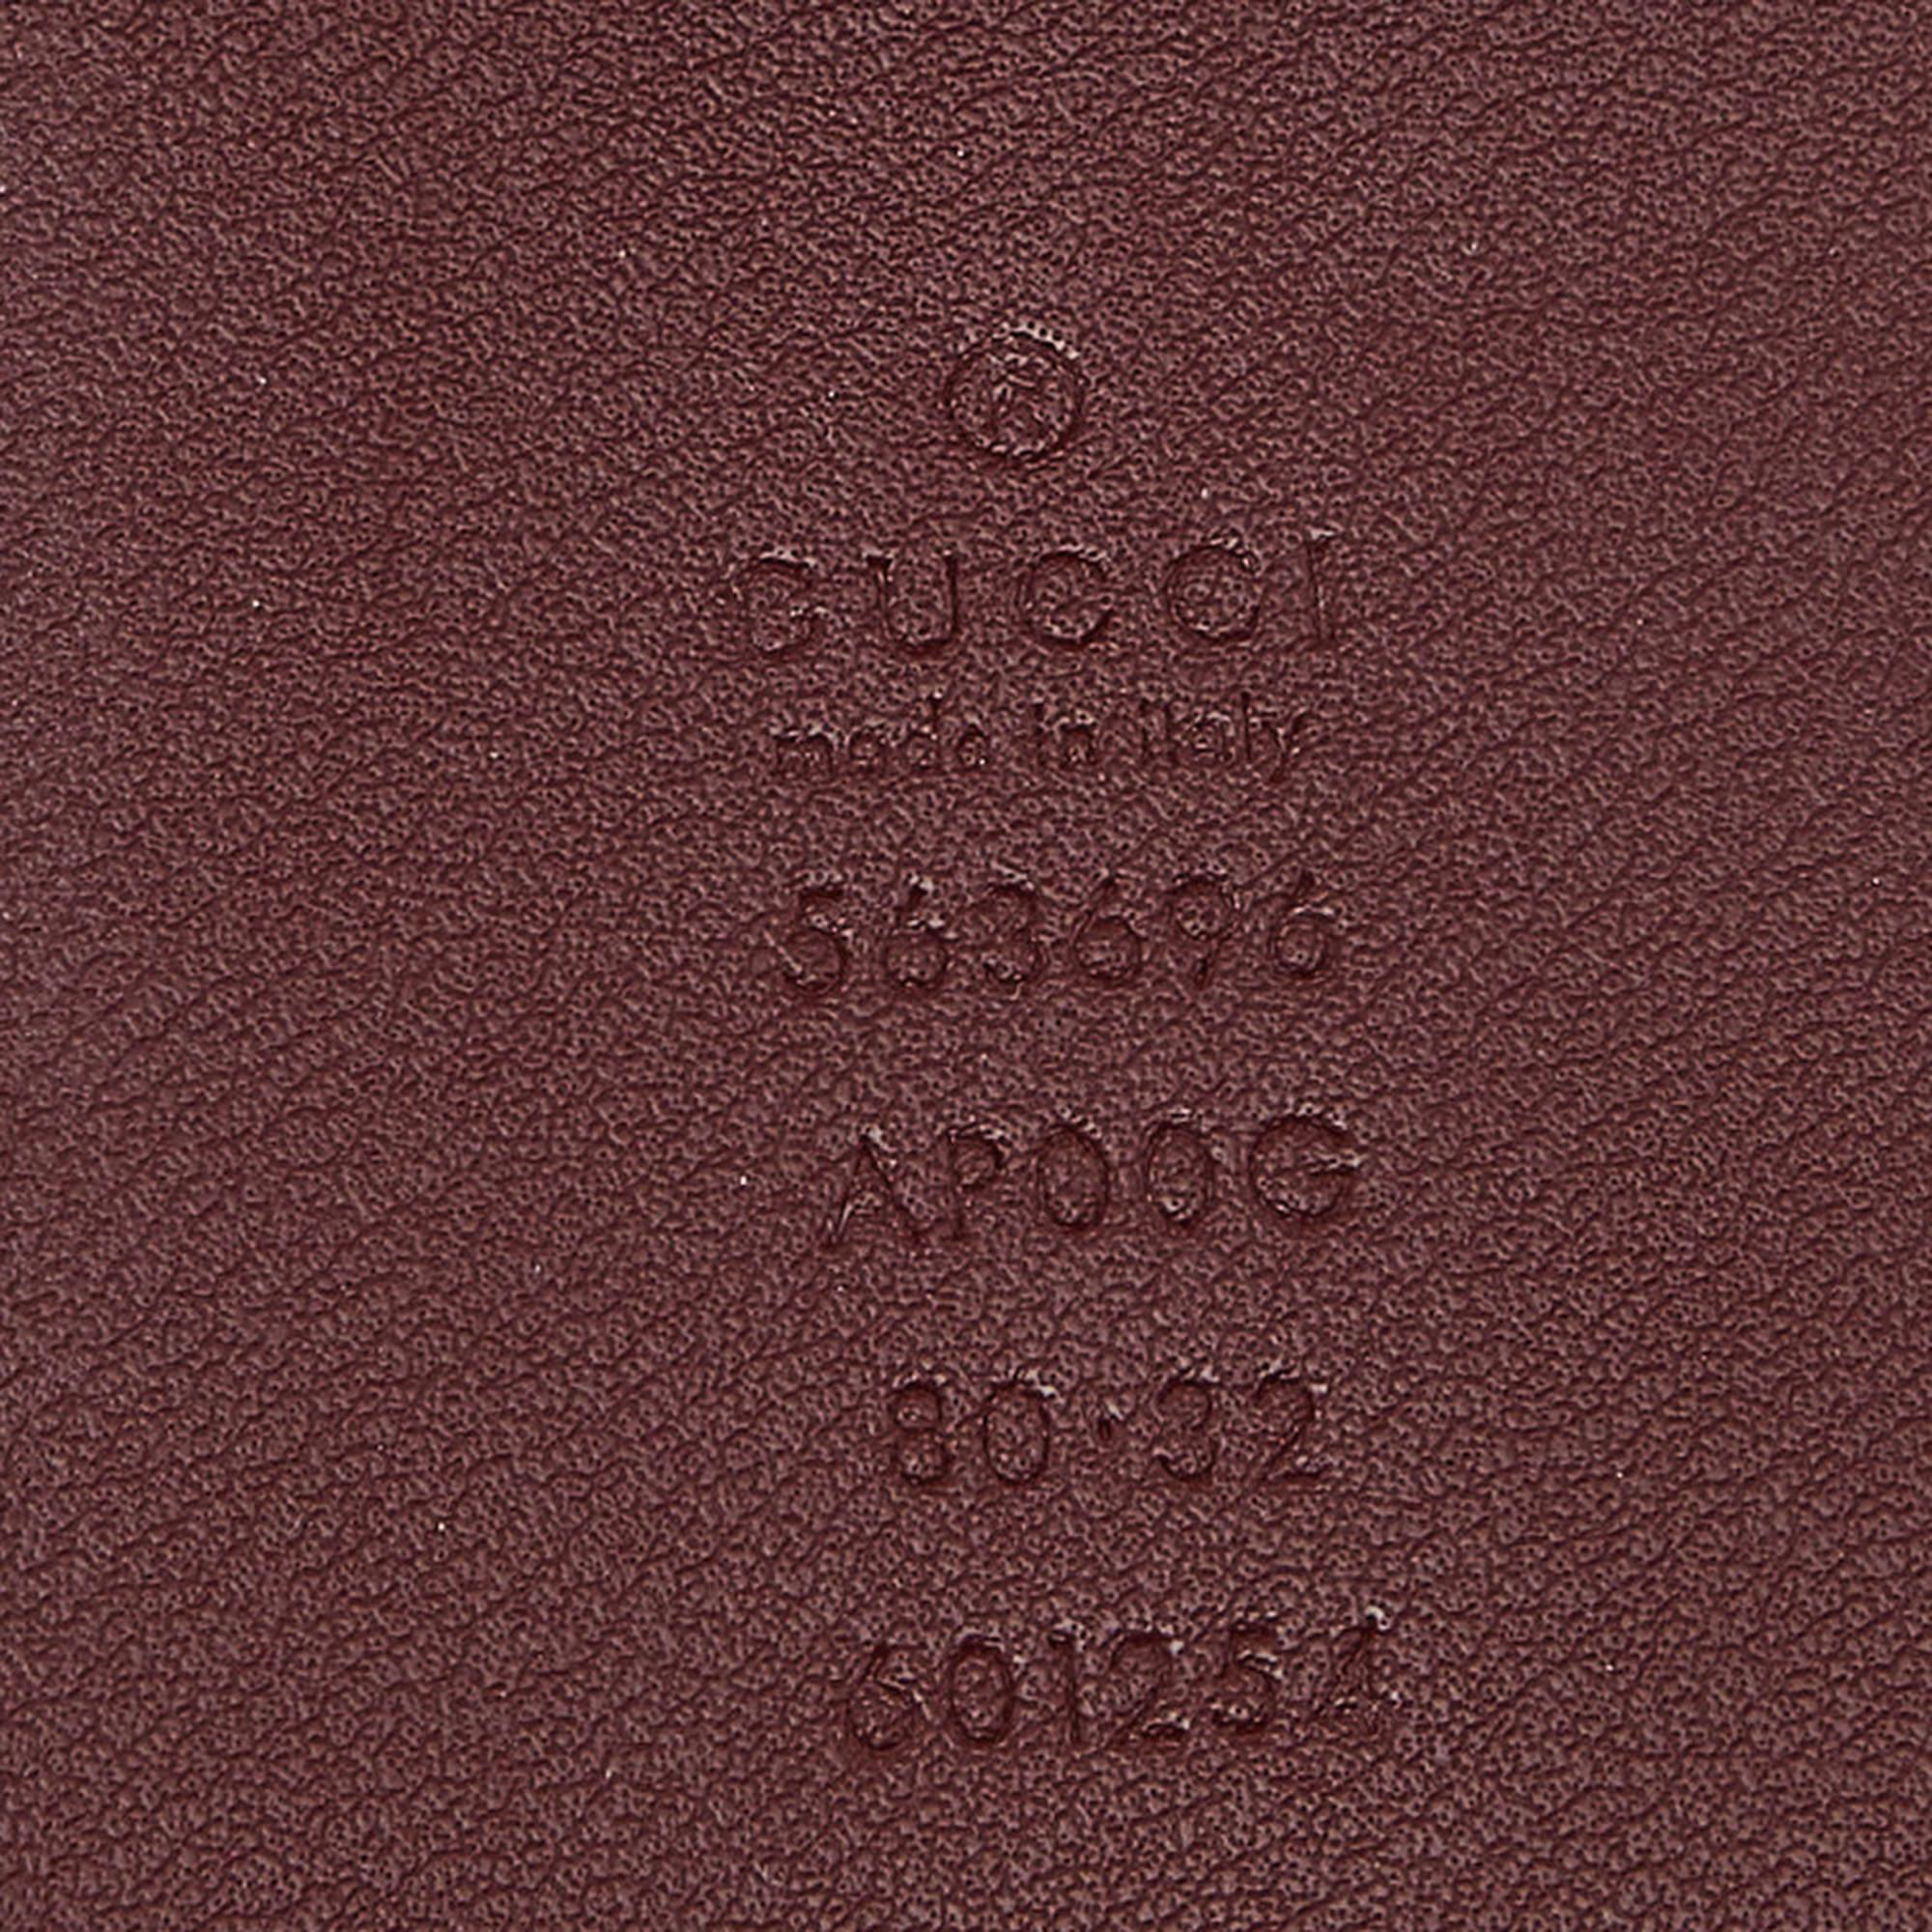 Gucci Burgundy Leather GG Marmont Wide Waist Buckle Belt 80CM In Good Condition For Sale In Dubai, Al Qouz 2